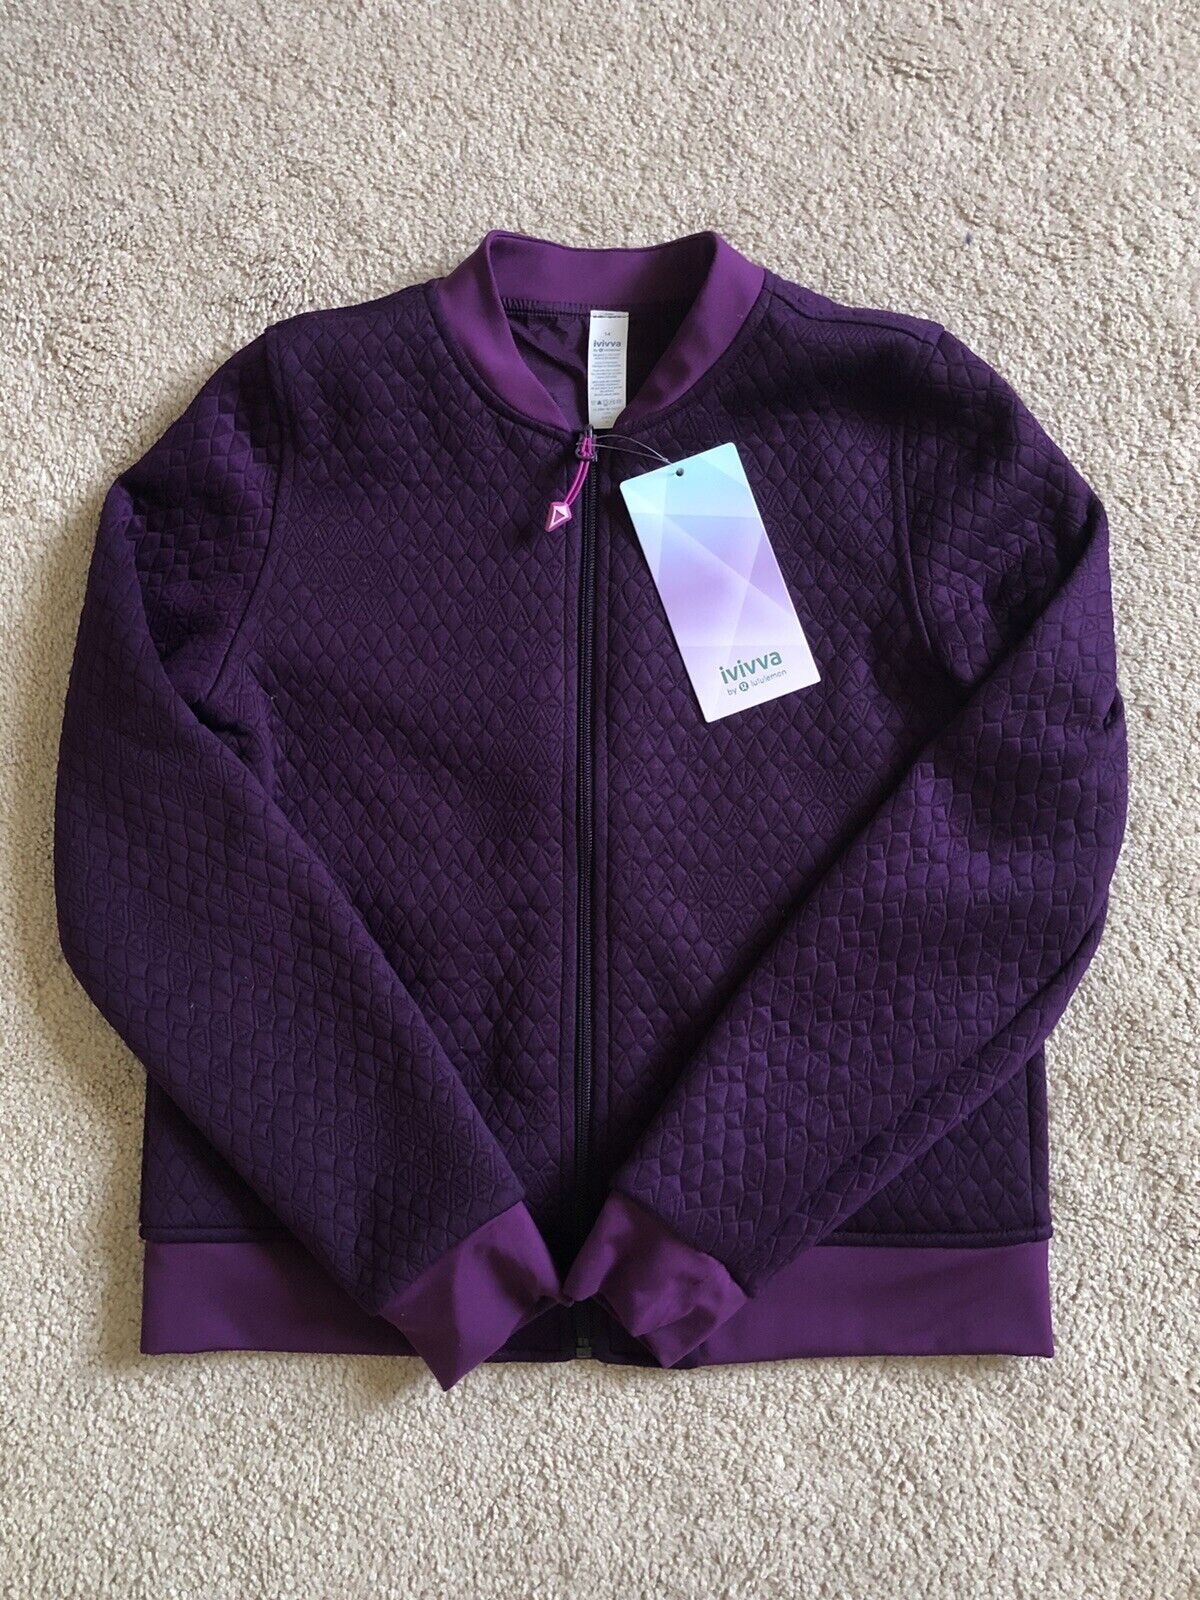 (new) Purple Ivivva Reversible Jacket For Girls - Size 14